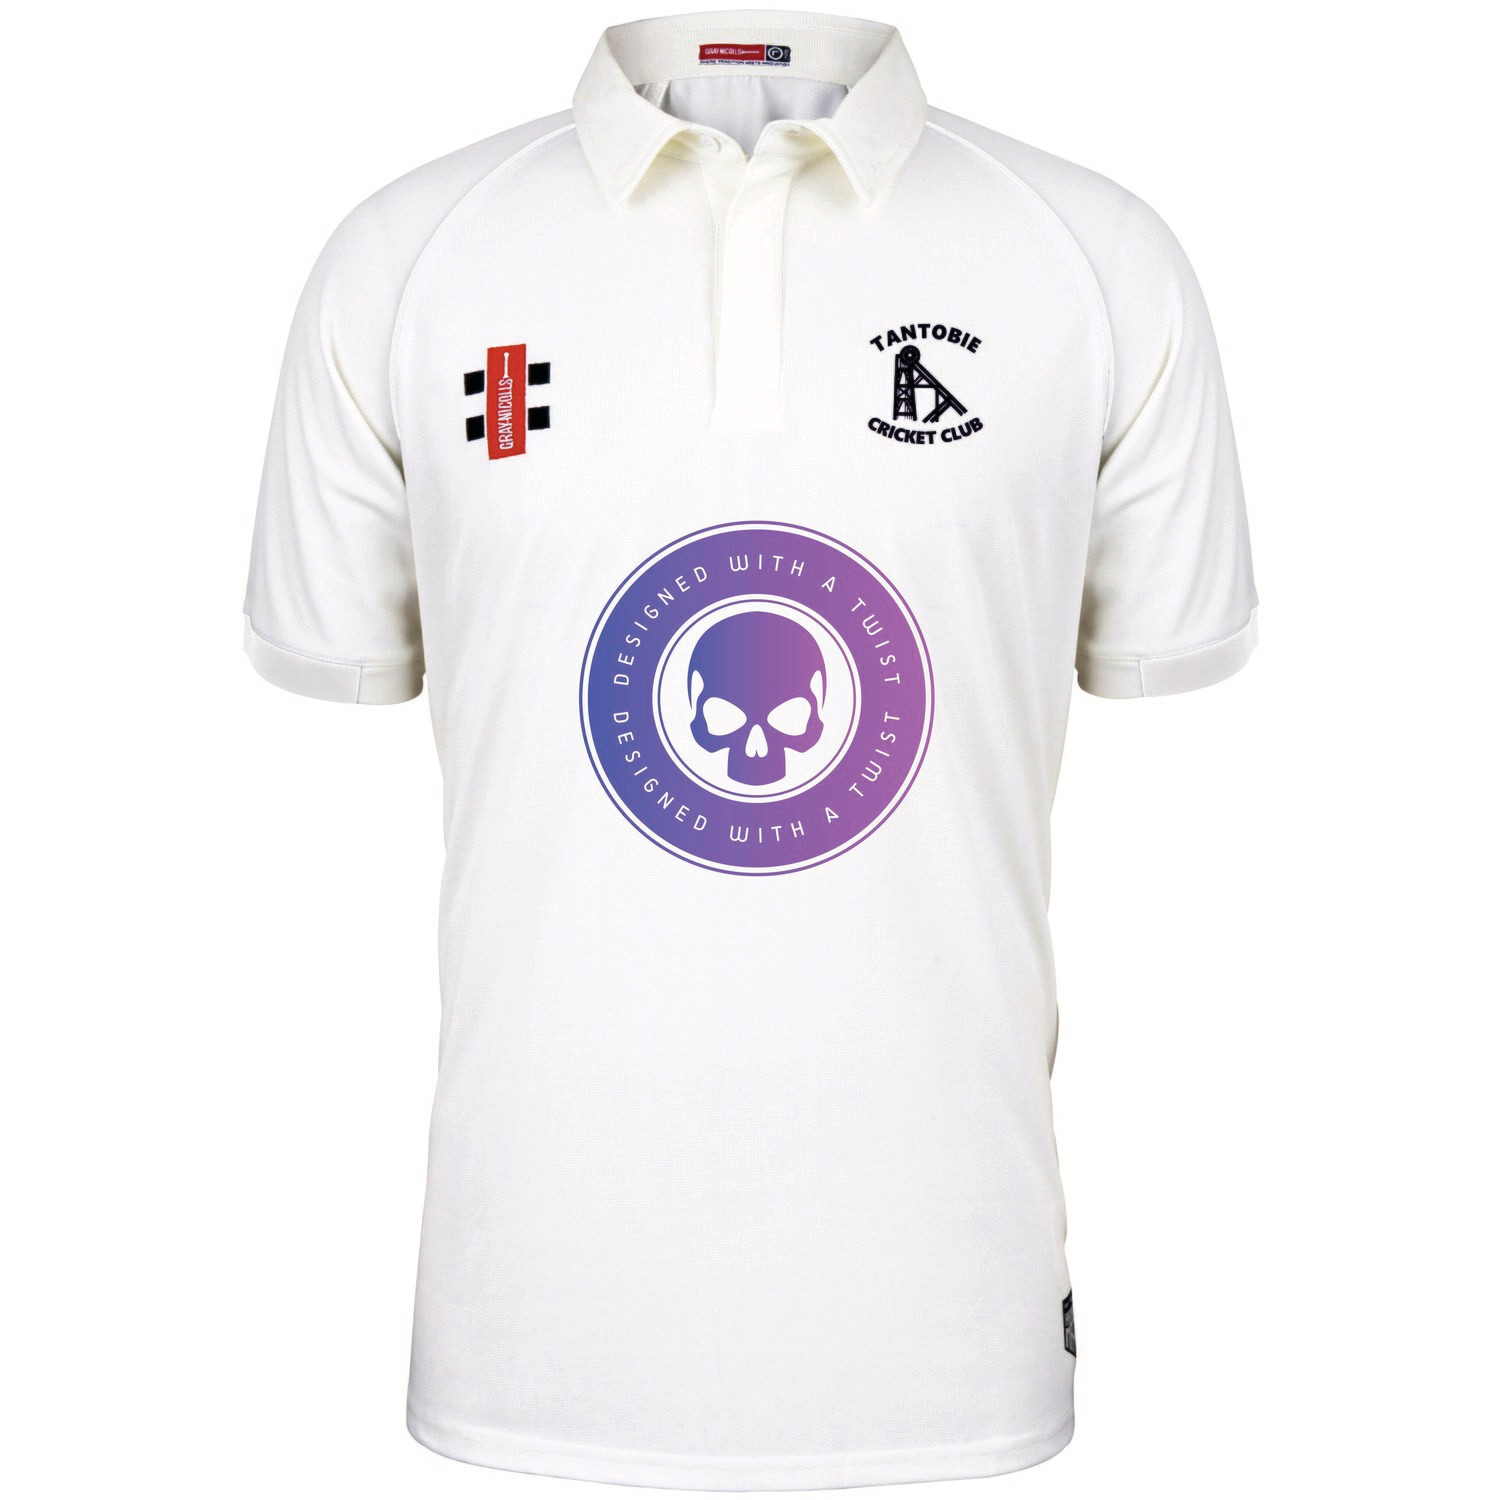 Tantobie Matrix V2 Short Sleeve Cricket Shirt